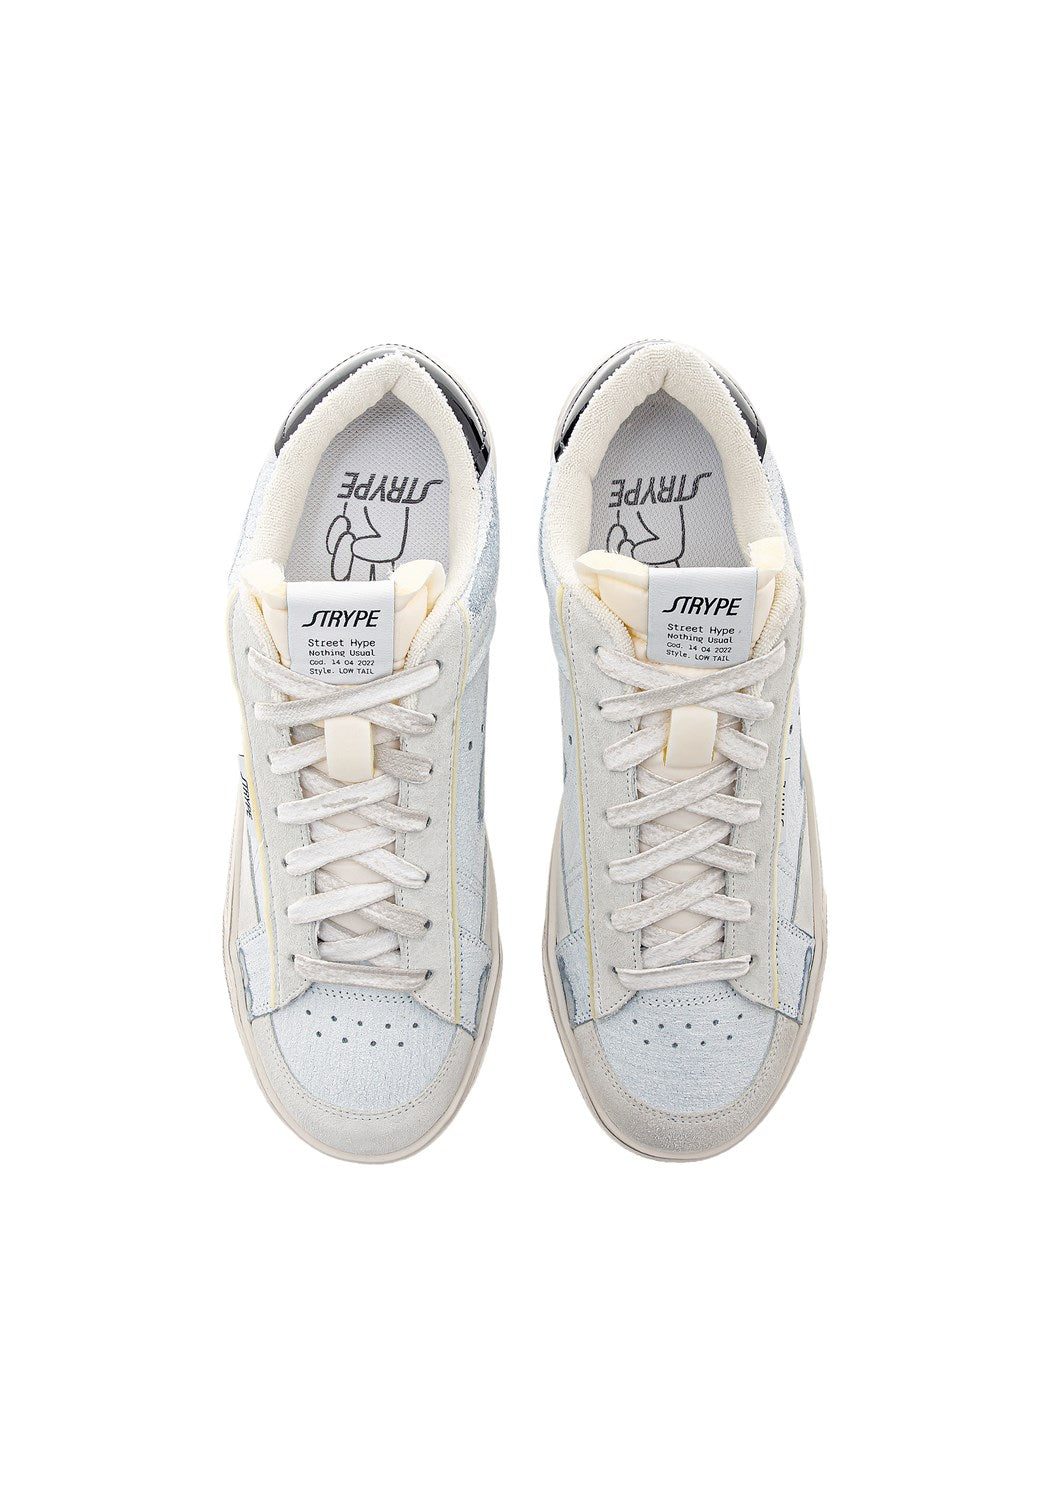 ST011-NE Sneaker Destroyed white/black | Bildmaterial bereitgestellt von SHOES.PLEASE.